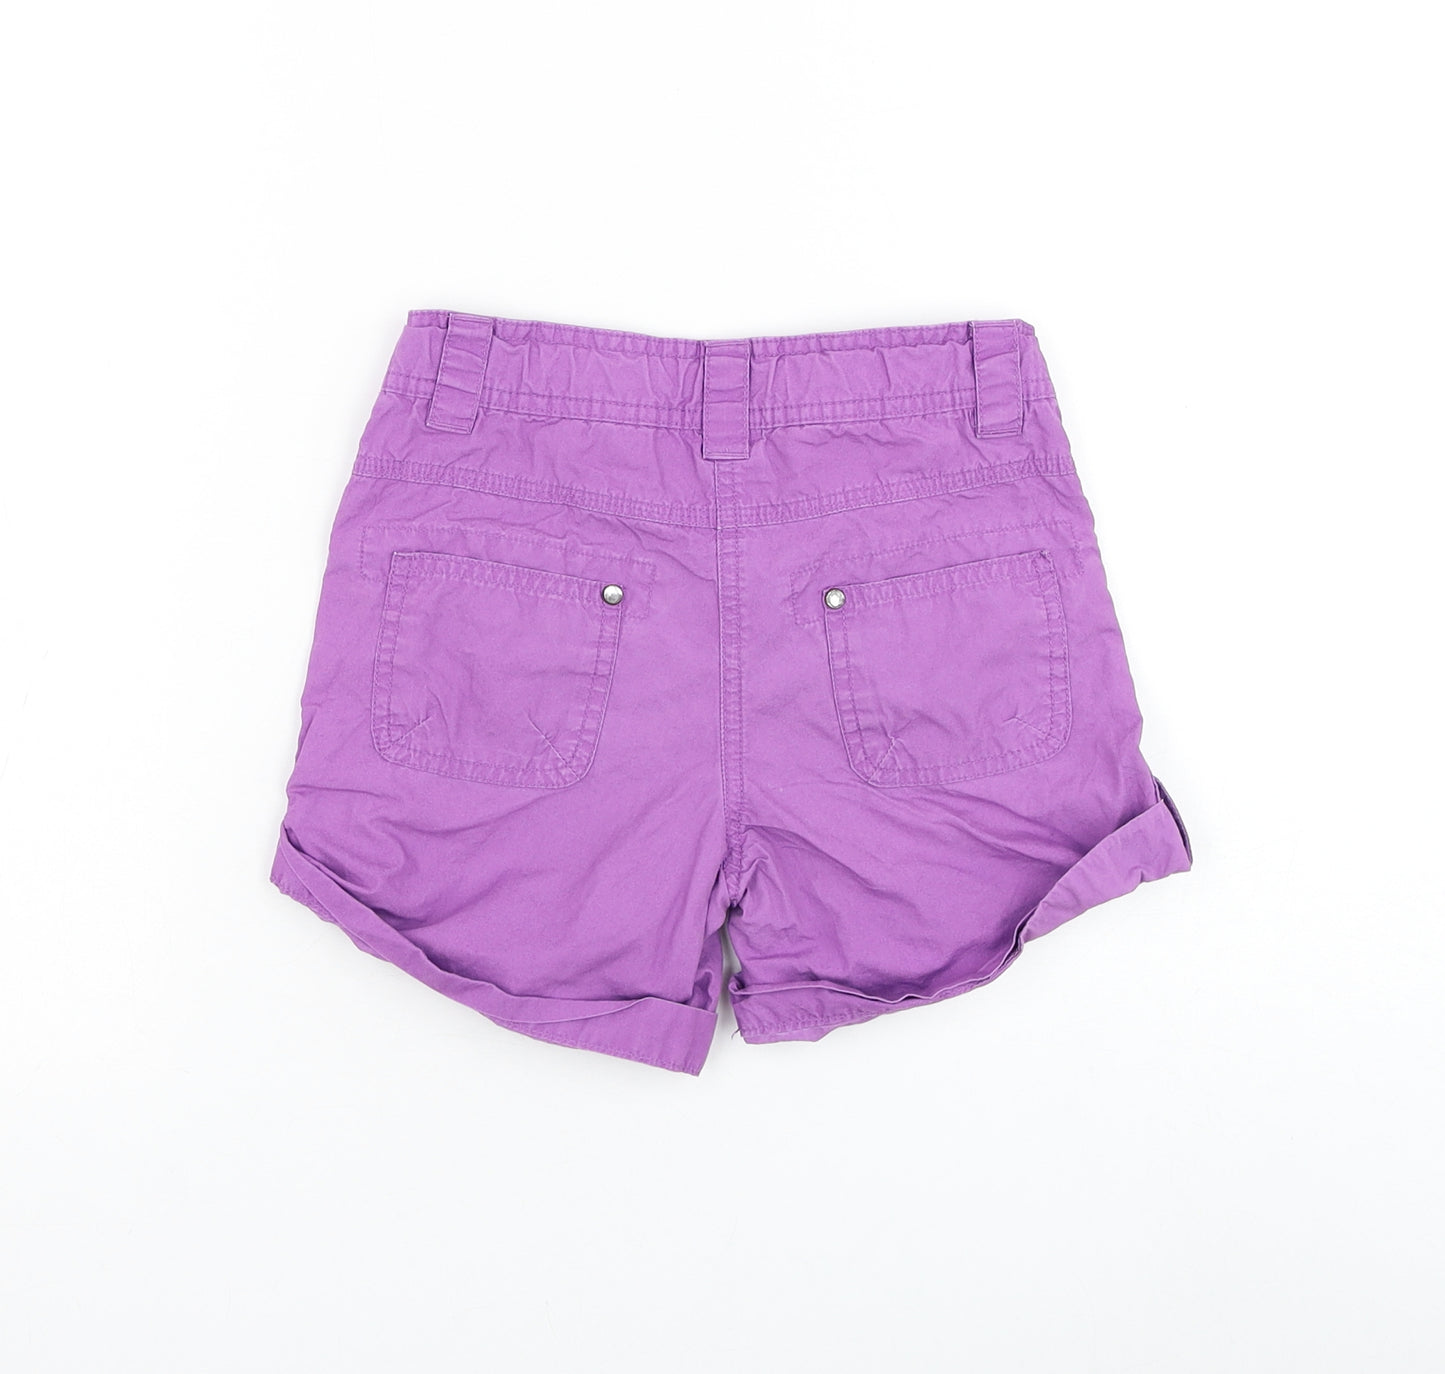 Dunnes Stores Girls Purple Cotton Bermuda Shorts Size 8 Years Regular Zip